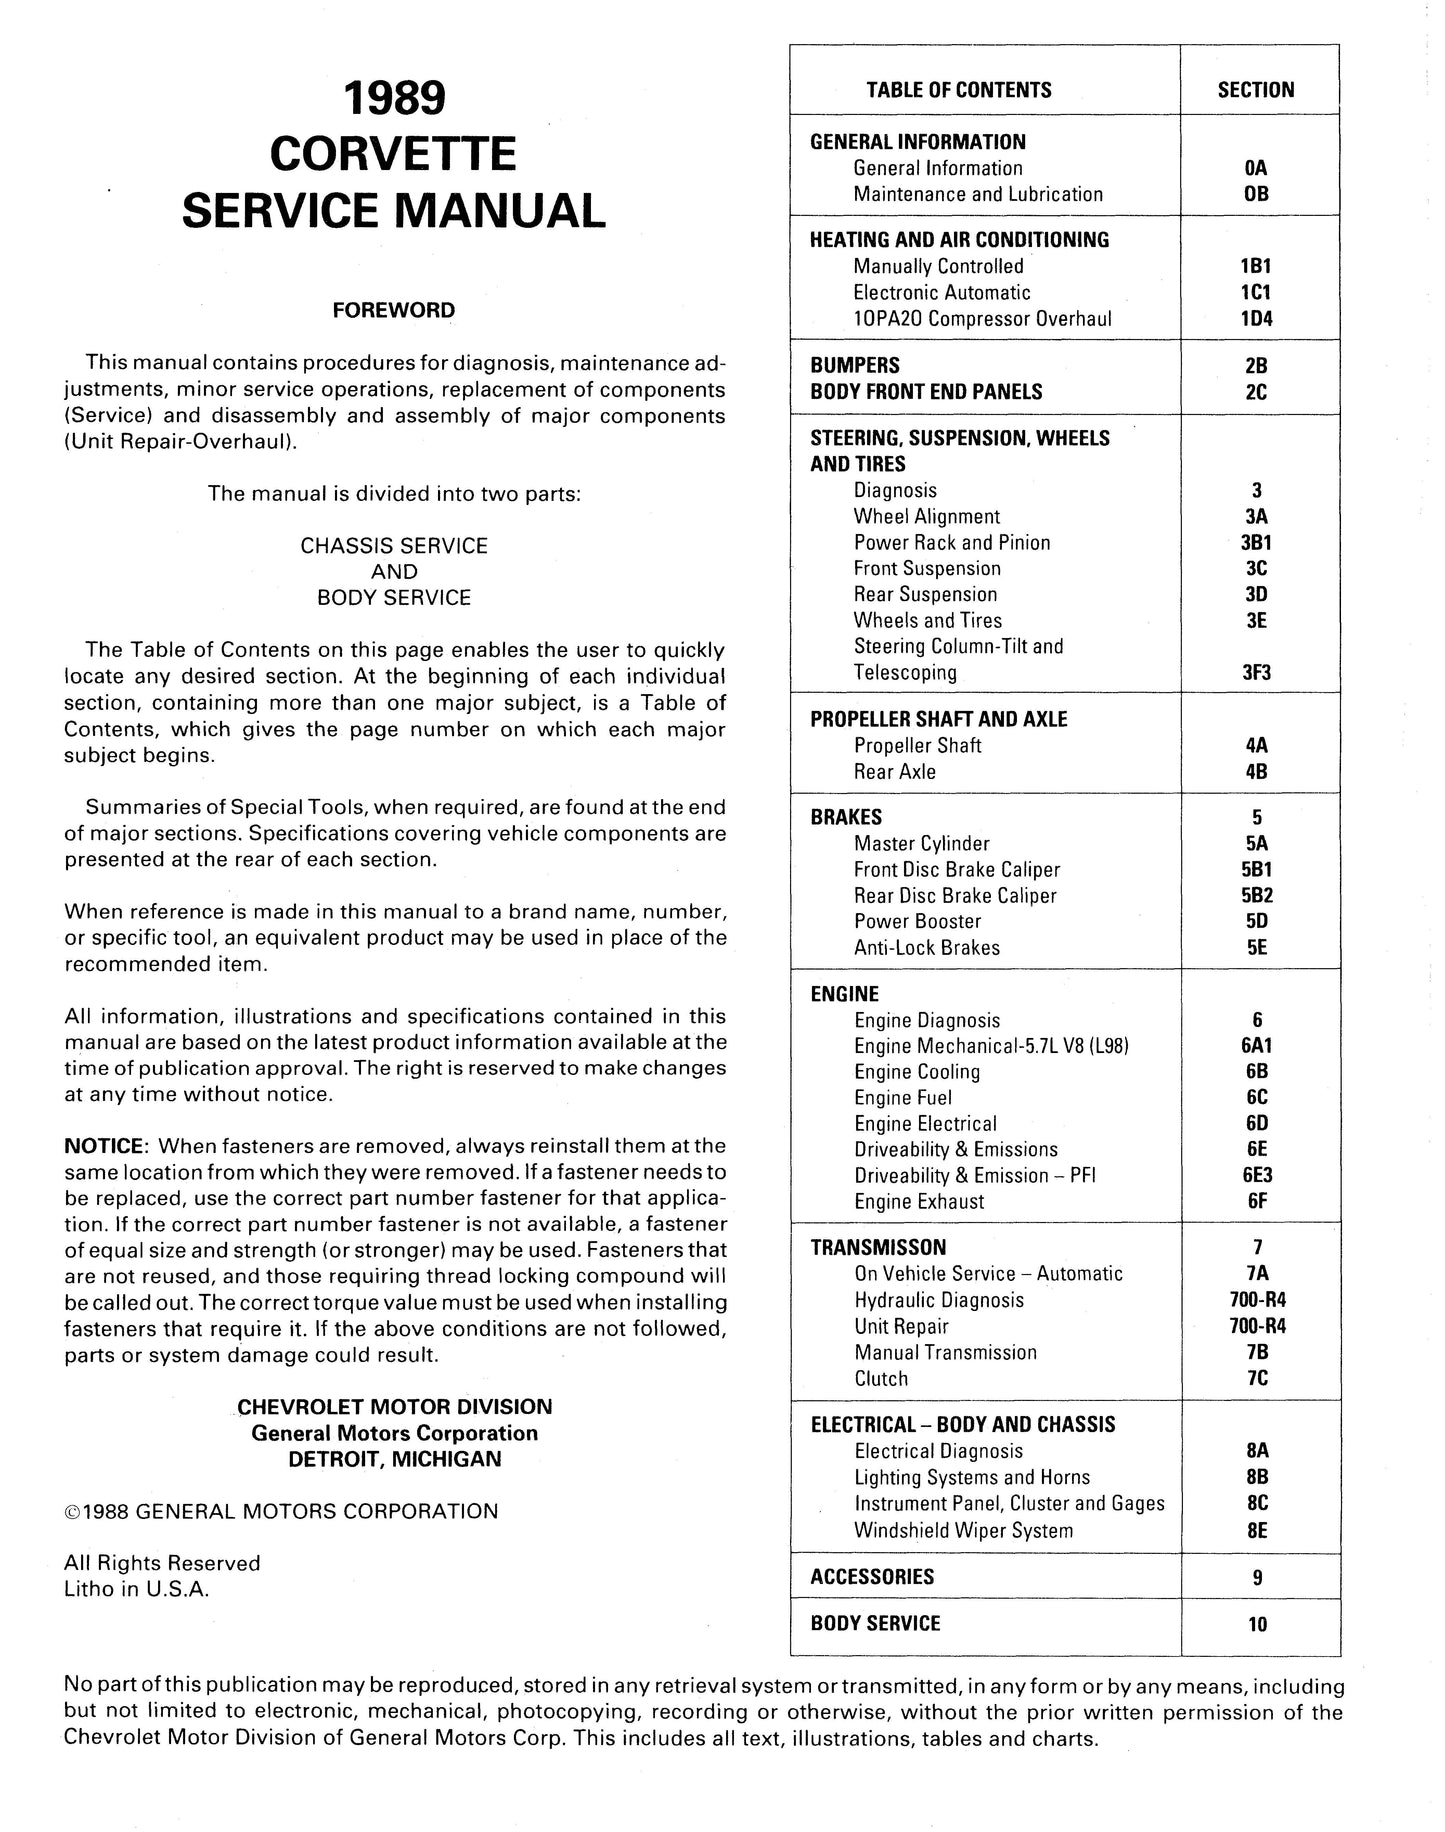 1988-1990 Chevrolet Corvette Shop Manuals